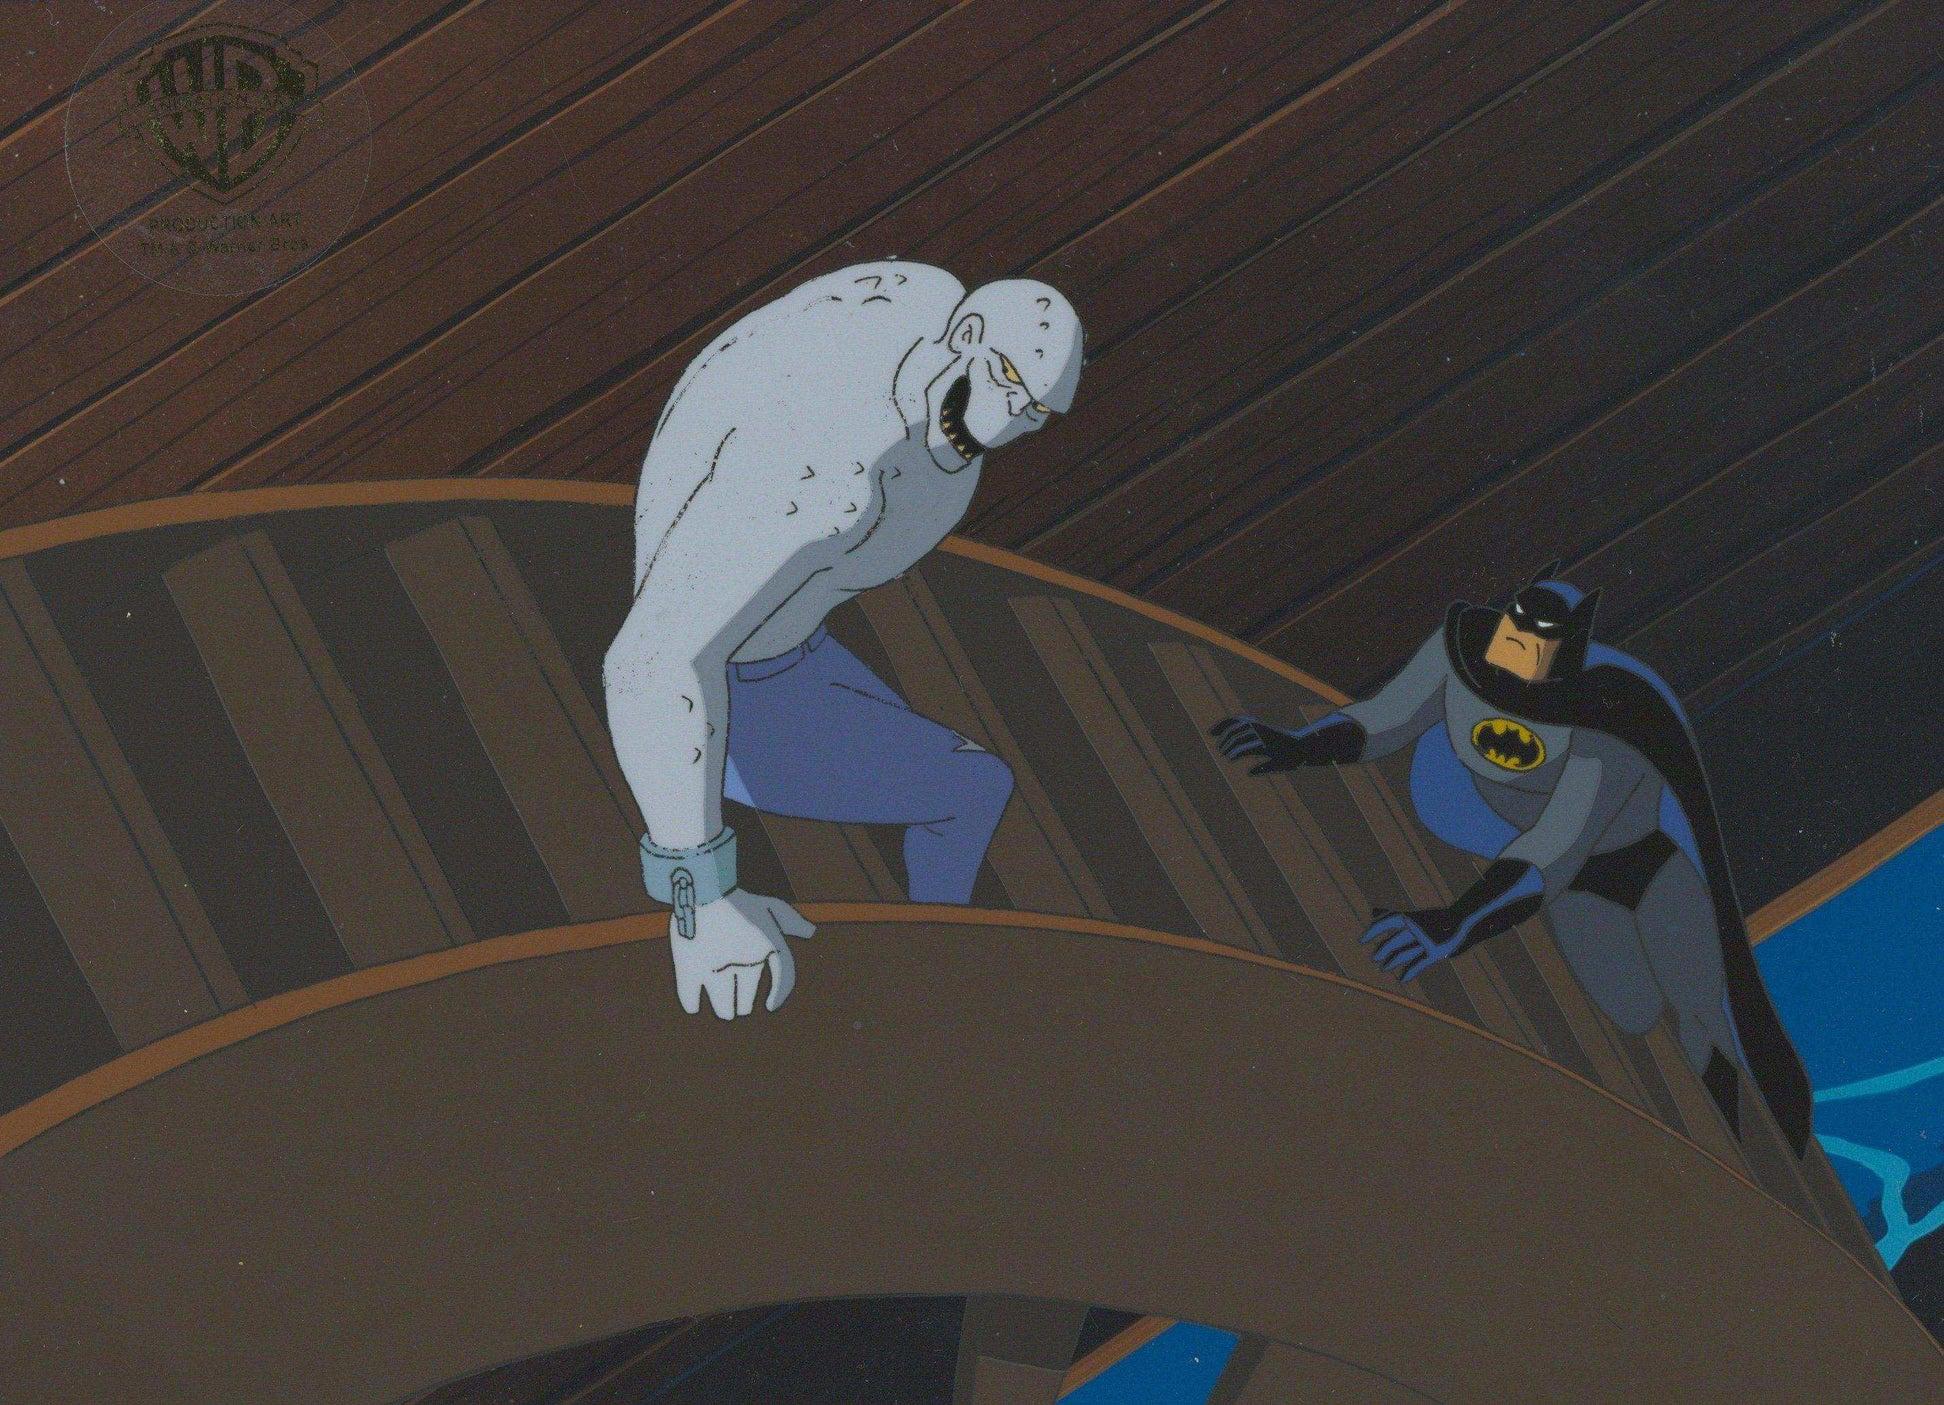 Batman The Animated Series Original Production Cel: Batman and Killer Croc - Art by DC Comics Studio Artists